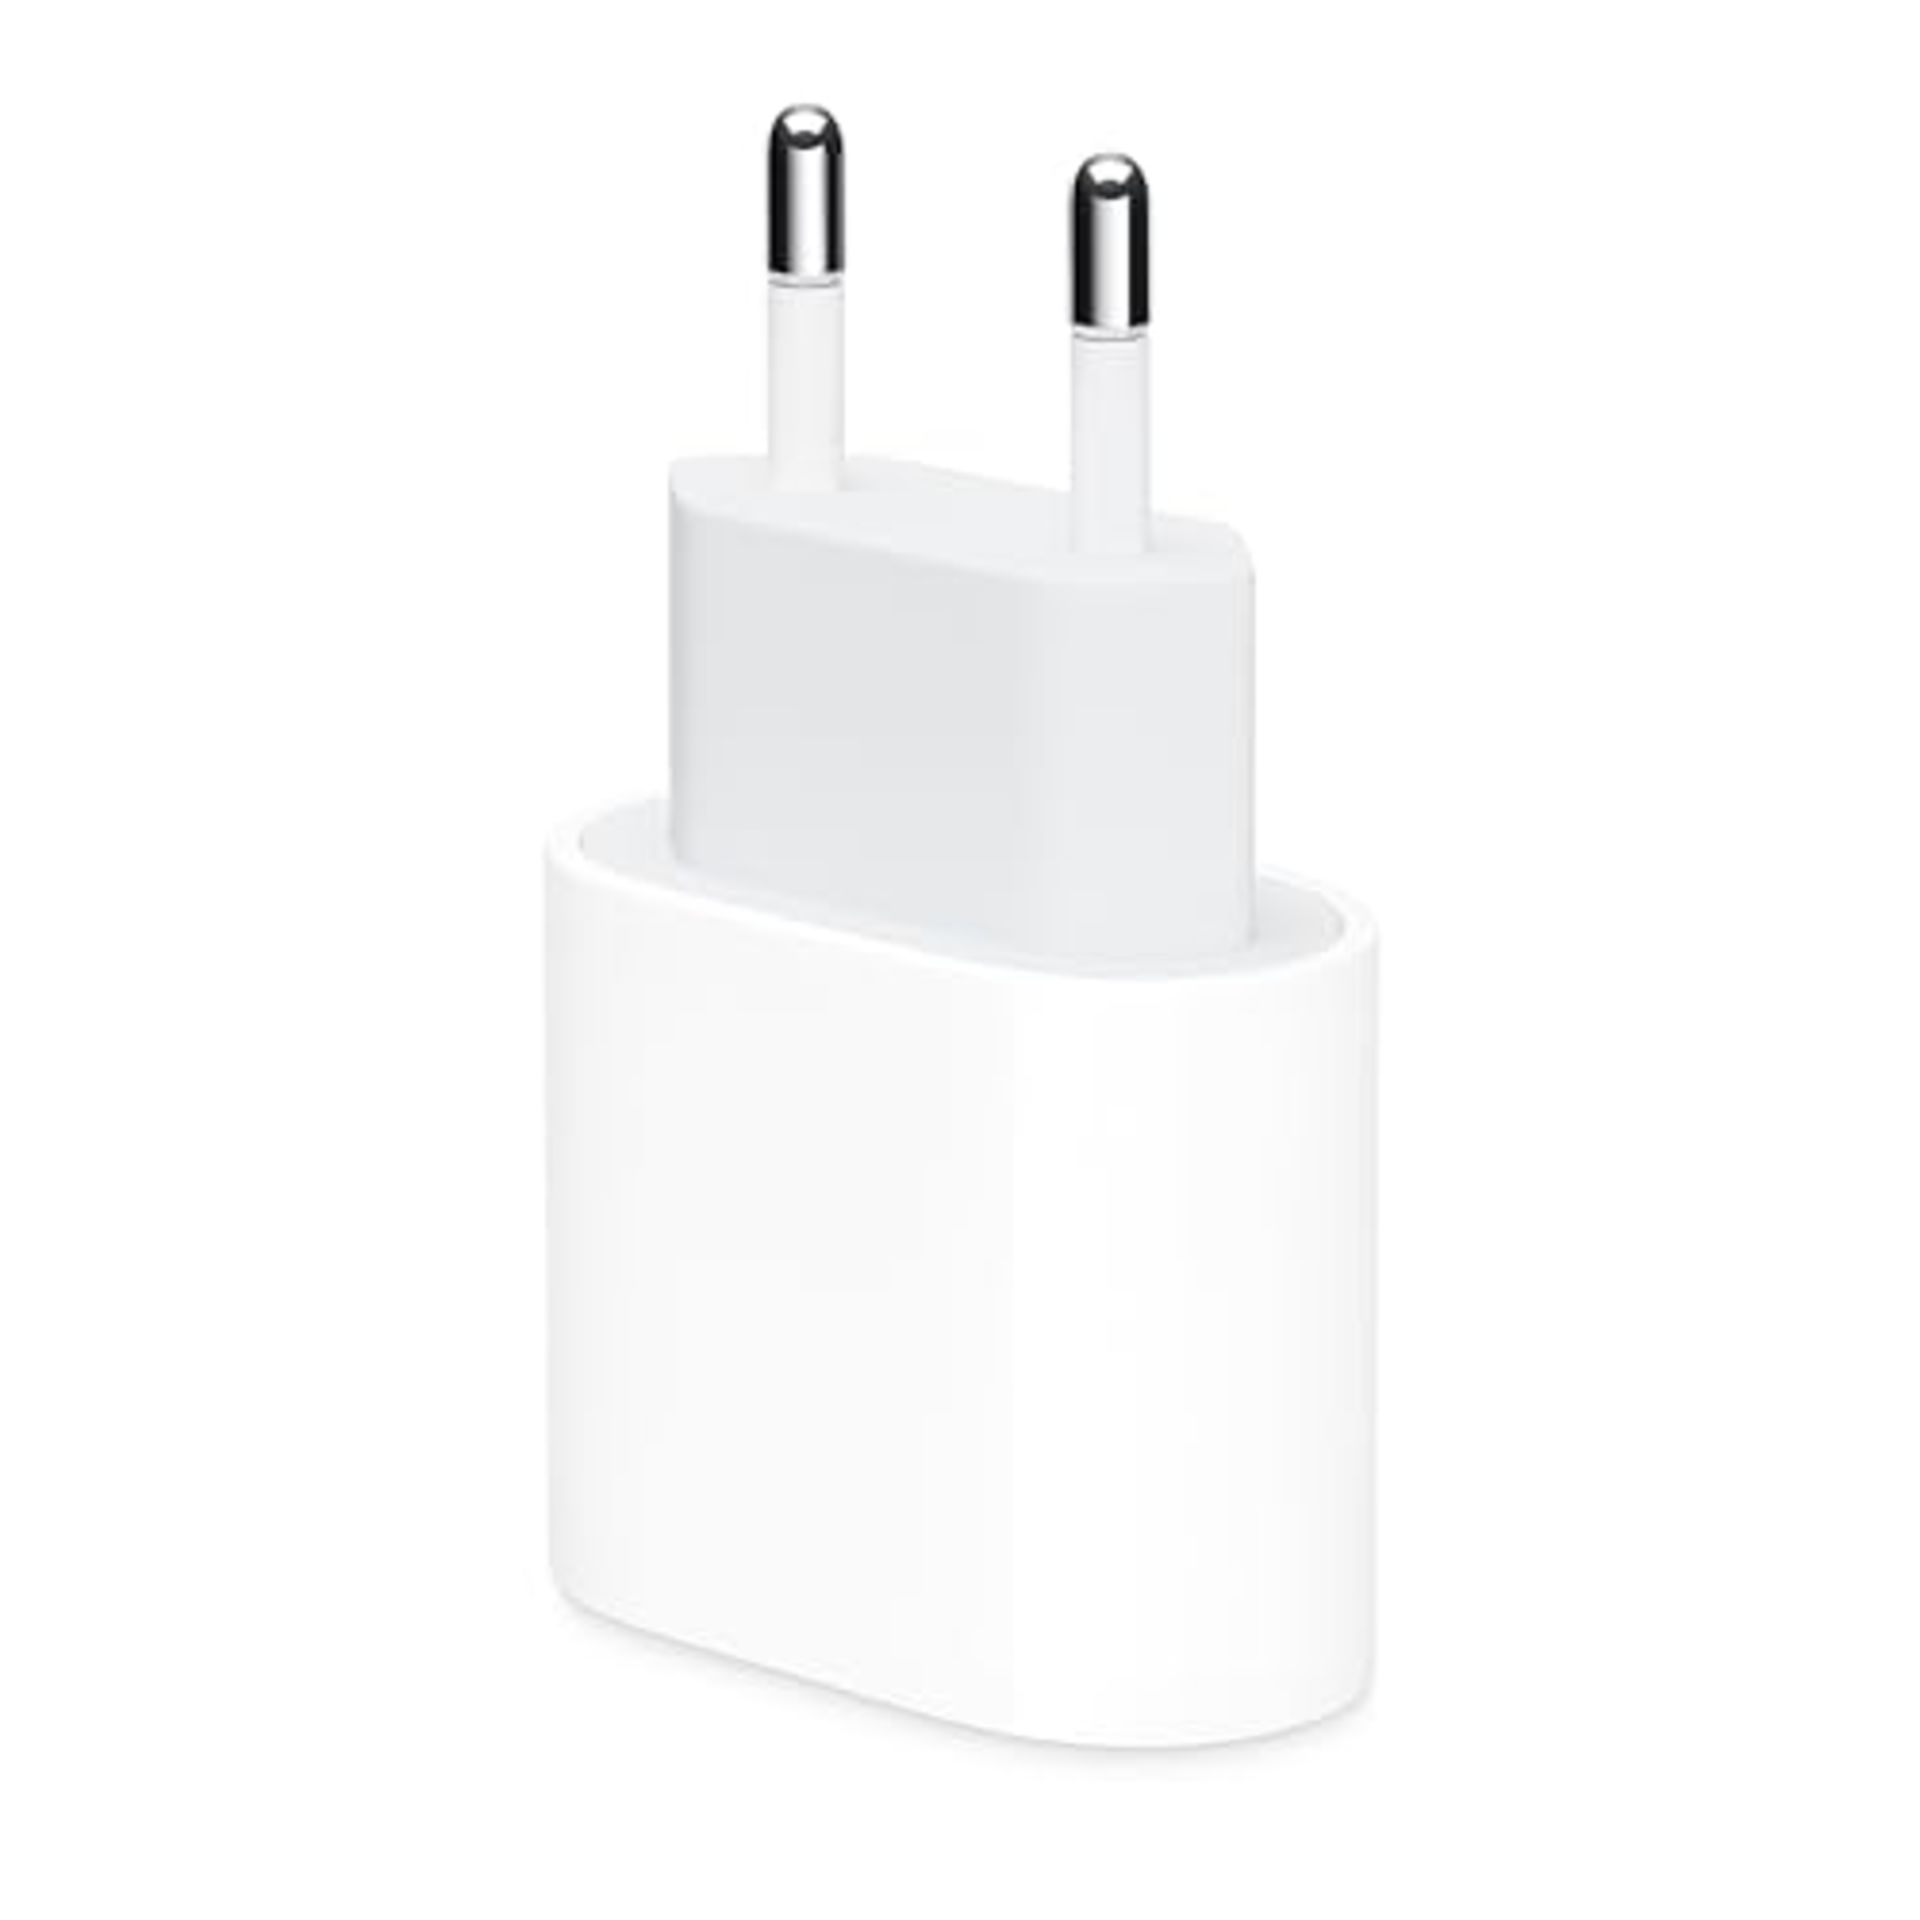 Apple USB-C Power Adapter 20W White - Image 4 of 6